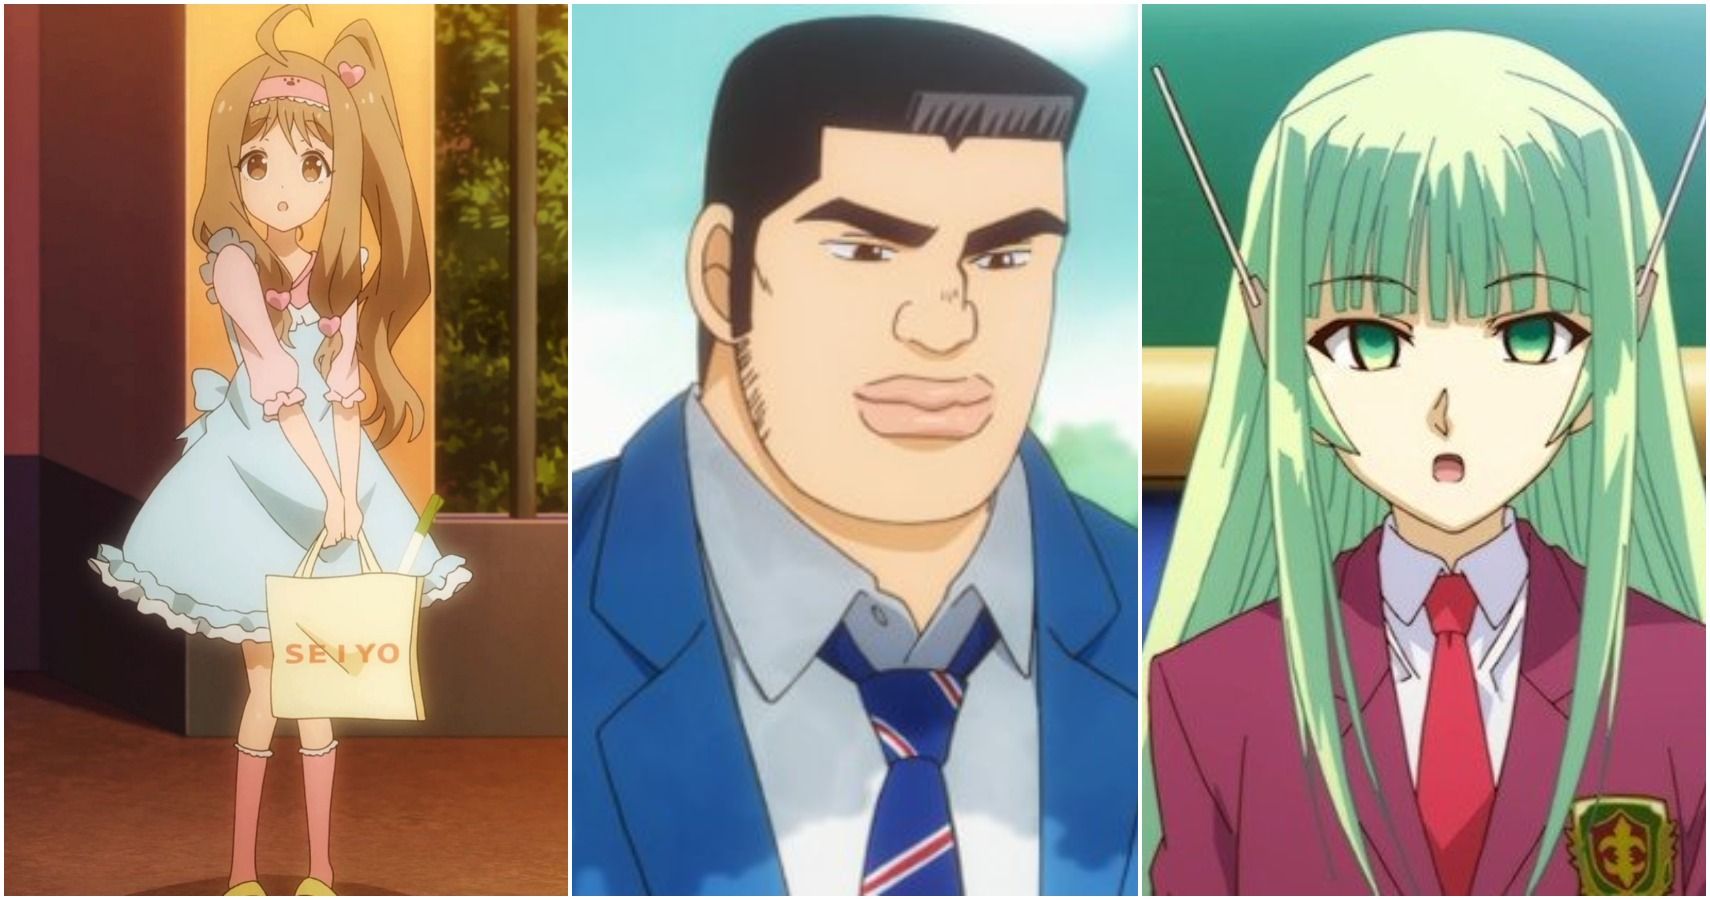 Who says all anime looks the same? : r/anime